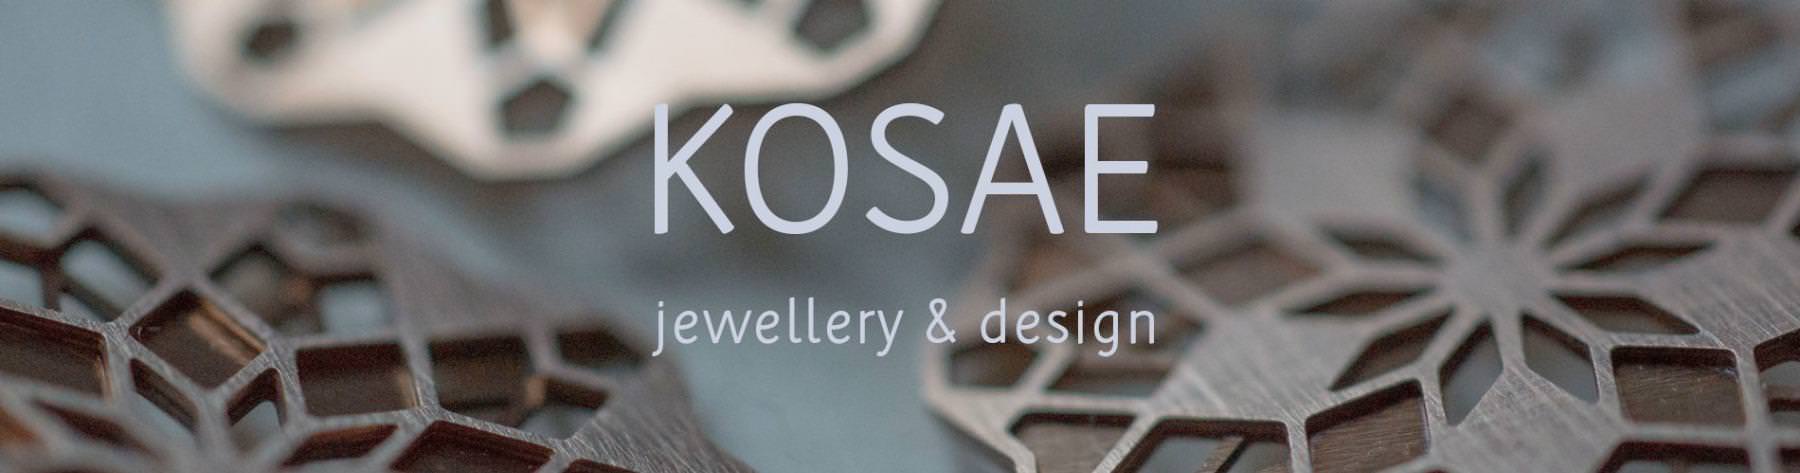 KOSAE_Hintergrundbild_Shop